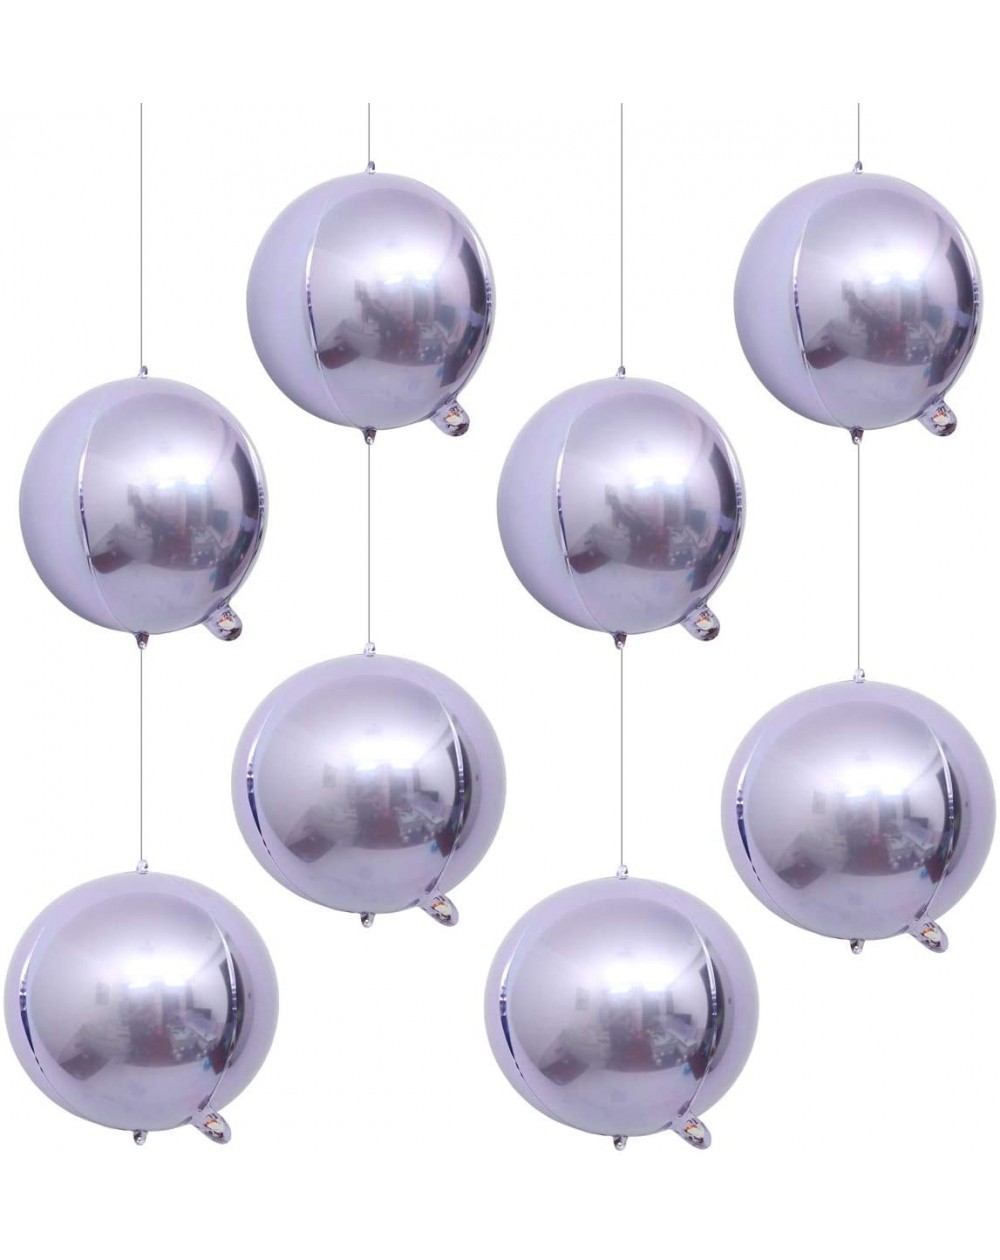 Balloons Hangable 8 Count 7" Violet 4D Large Round Sphere Aluminum Foil Balloon Mirror Metallic Silver Balloon Birthday Party...